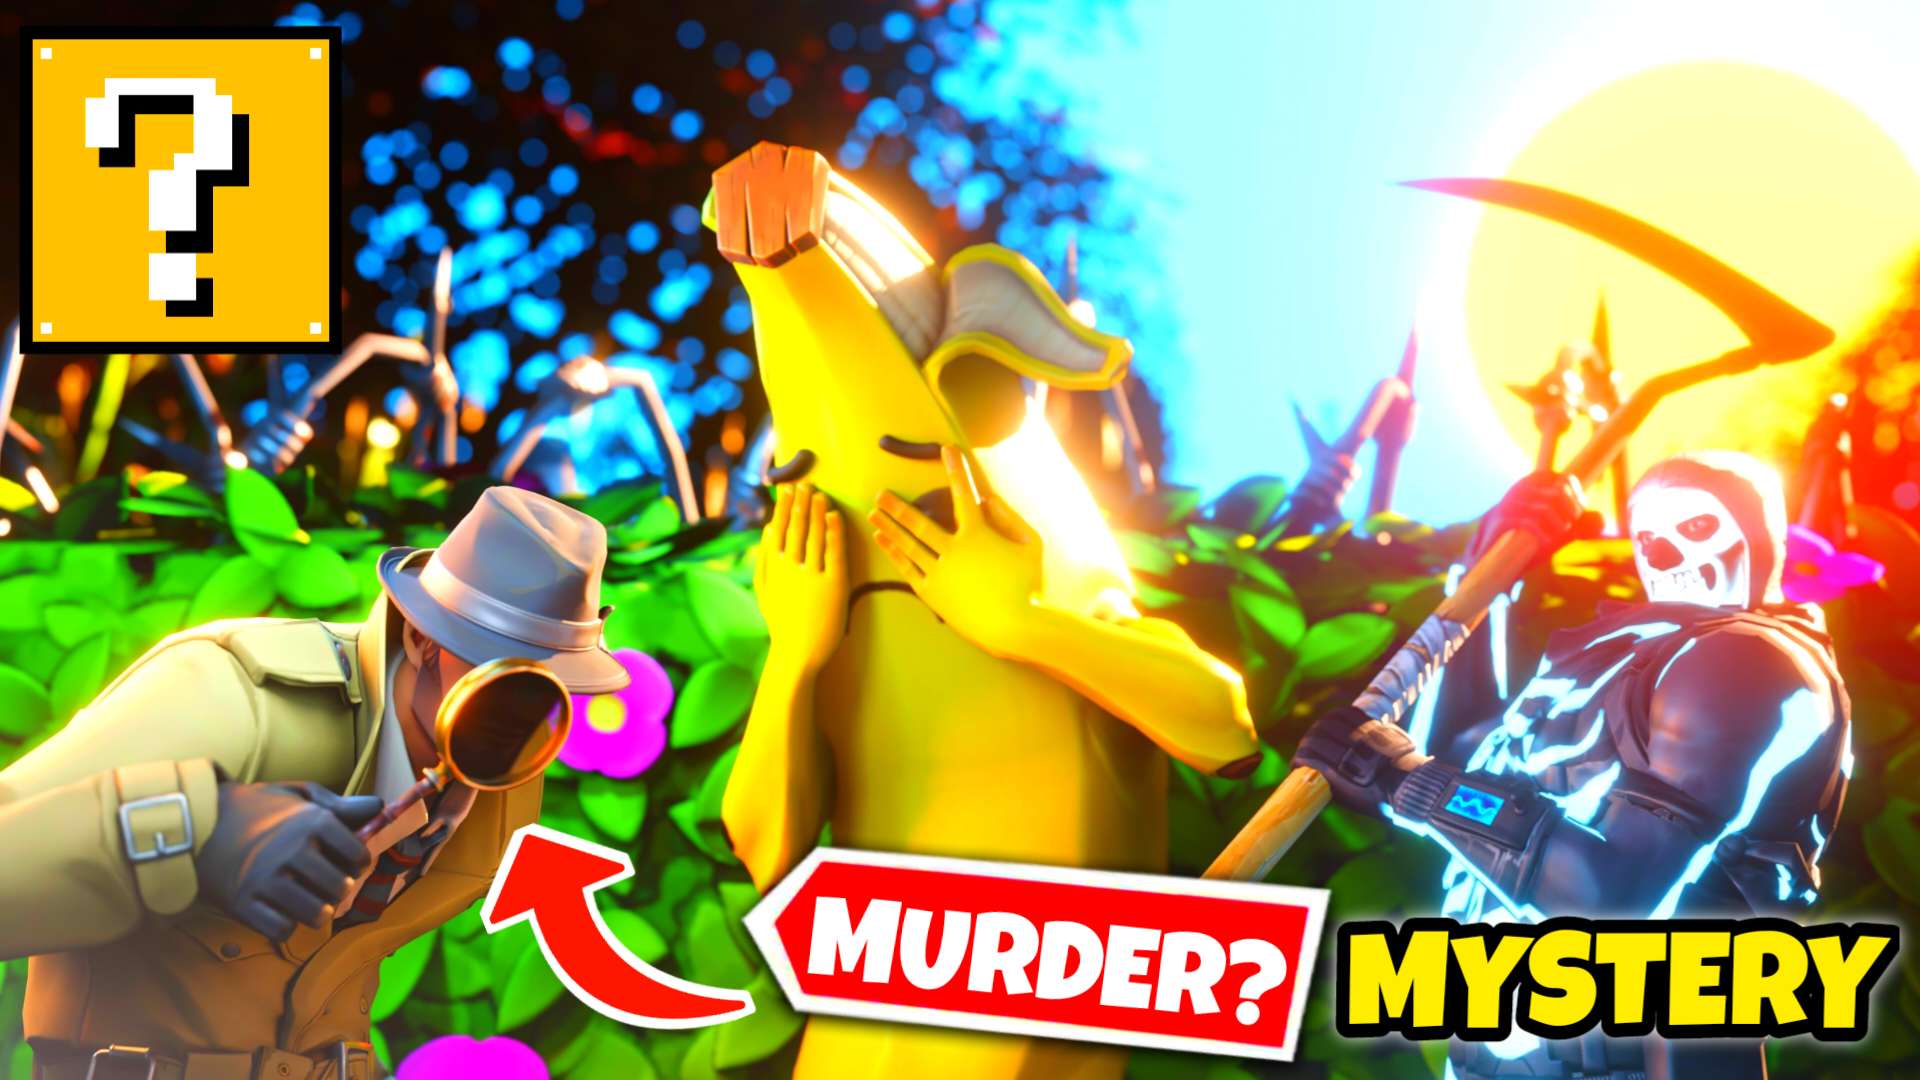 Murder Mystery 2 PRO Gameplay 